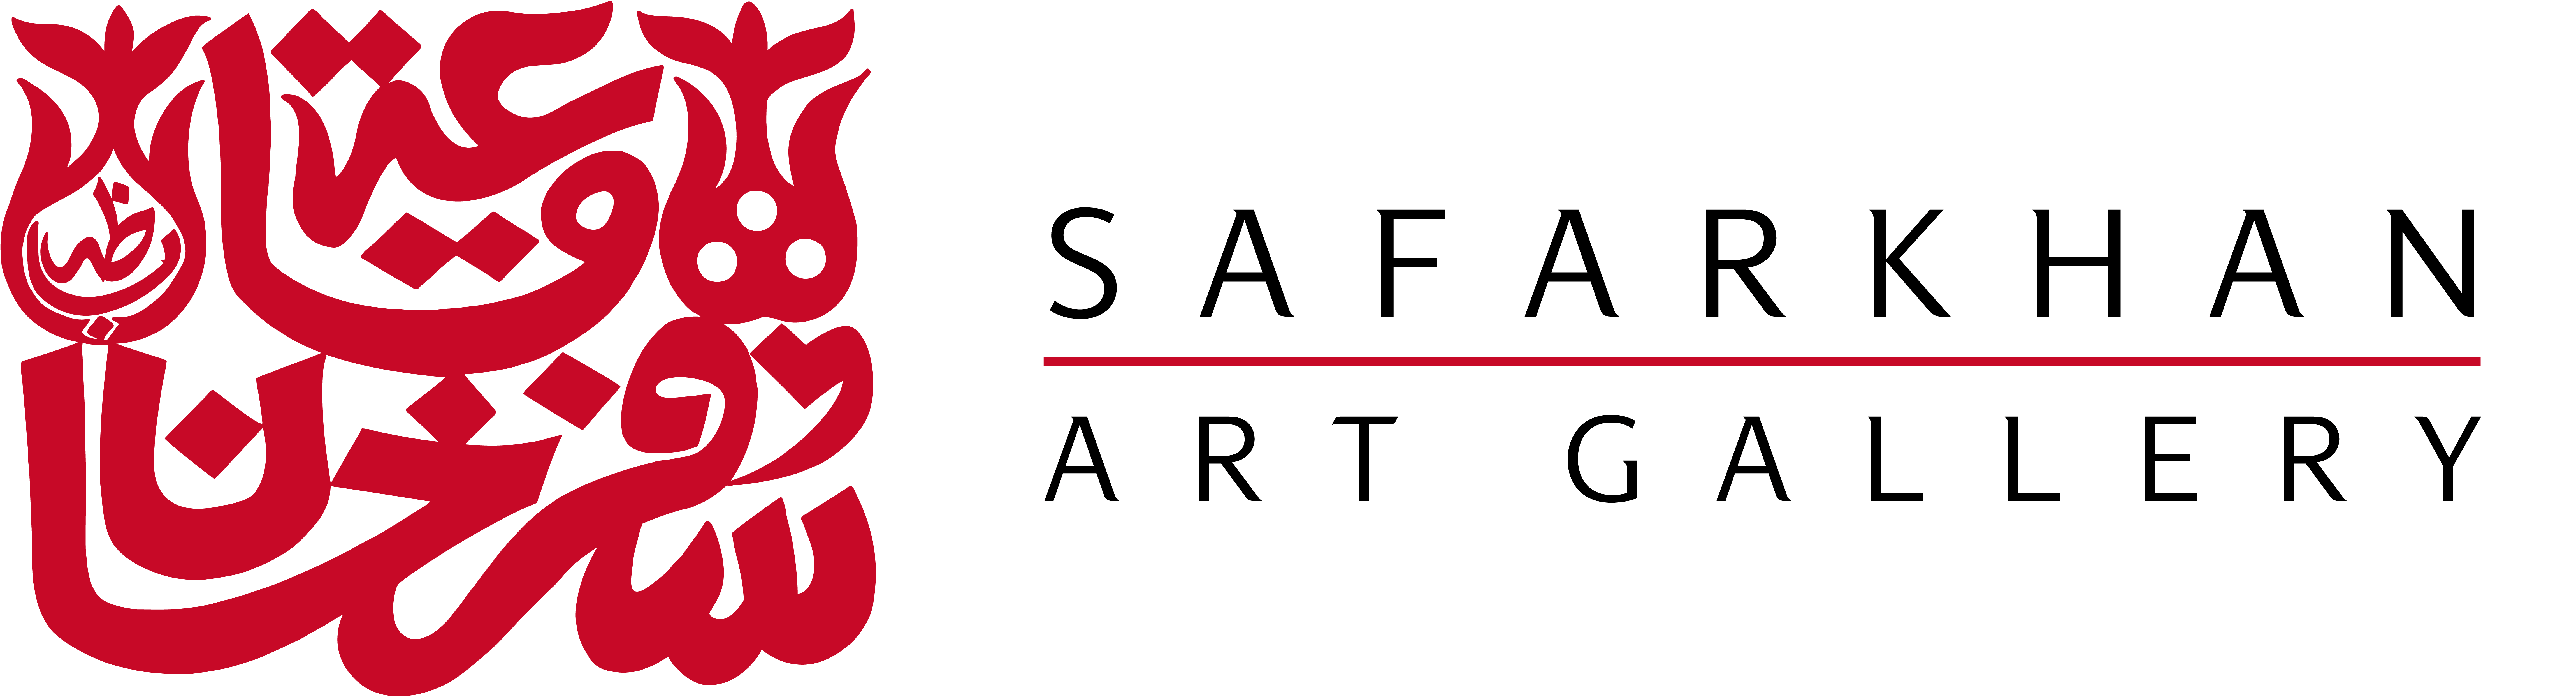 Safarkhan Art Gallery company logo